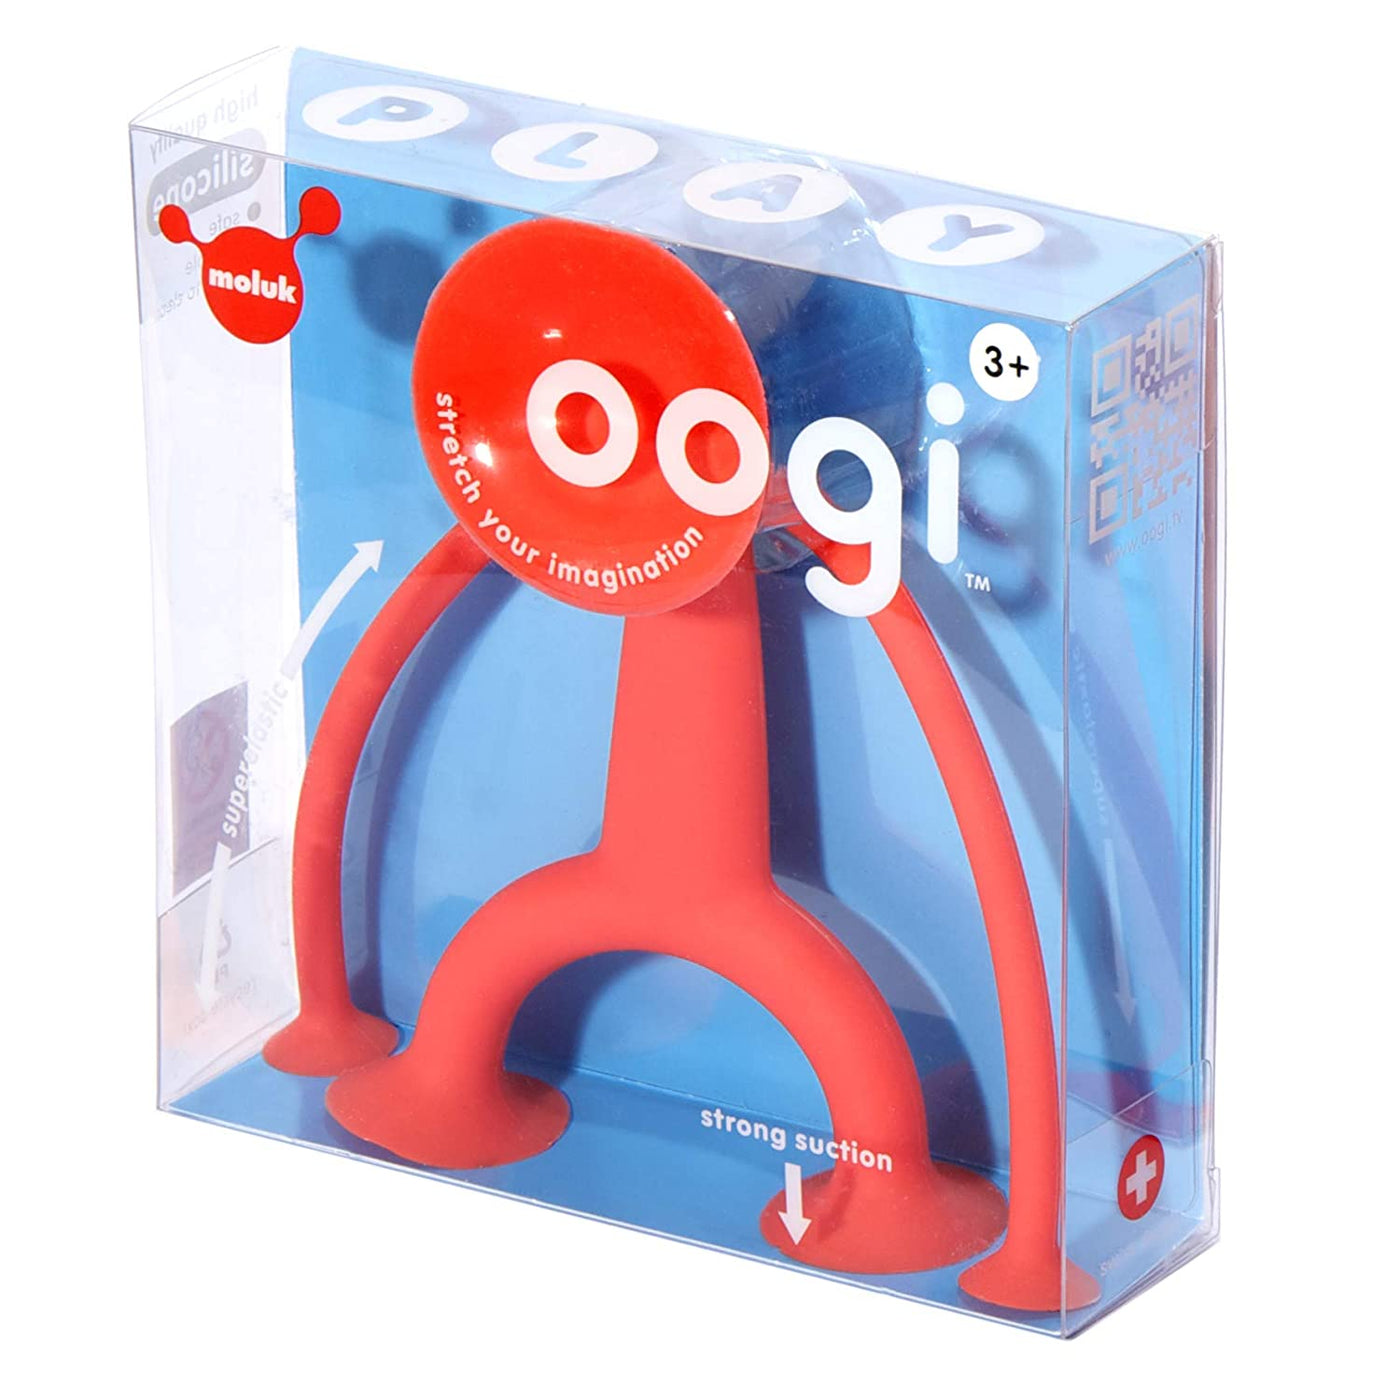 Oogi Fidget Toy - Red ( Small ) | Moluk Toys